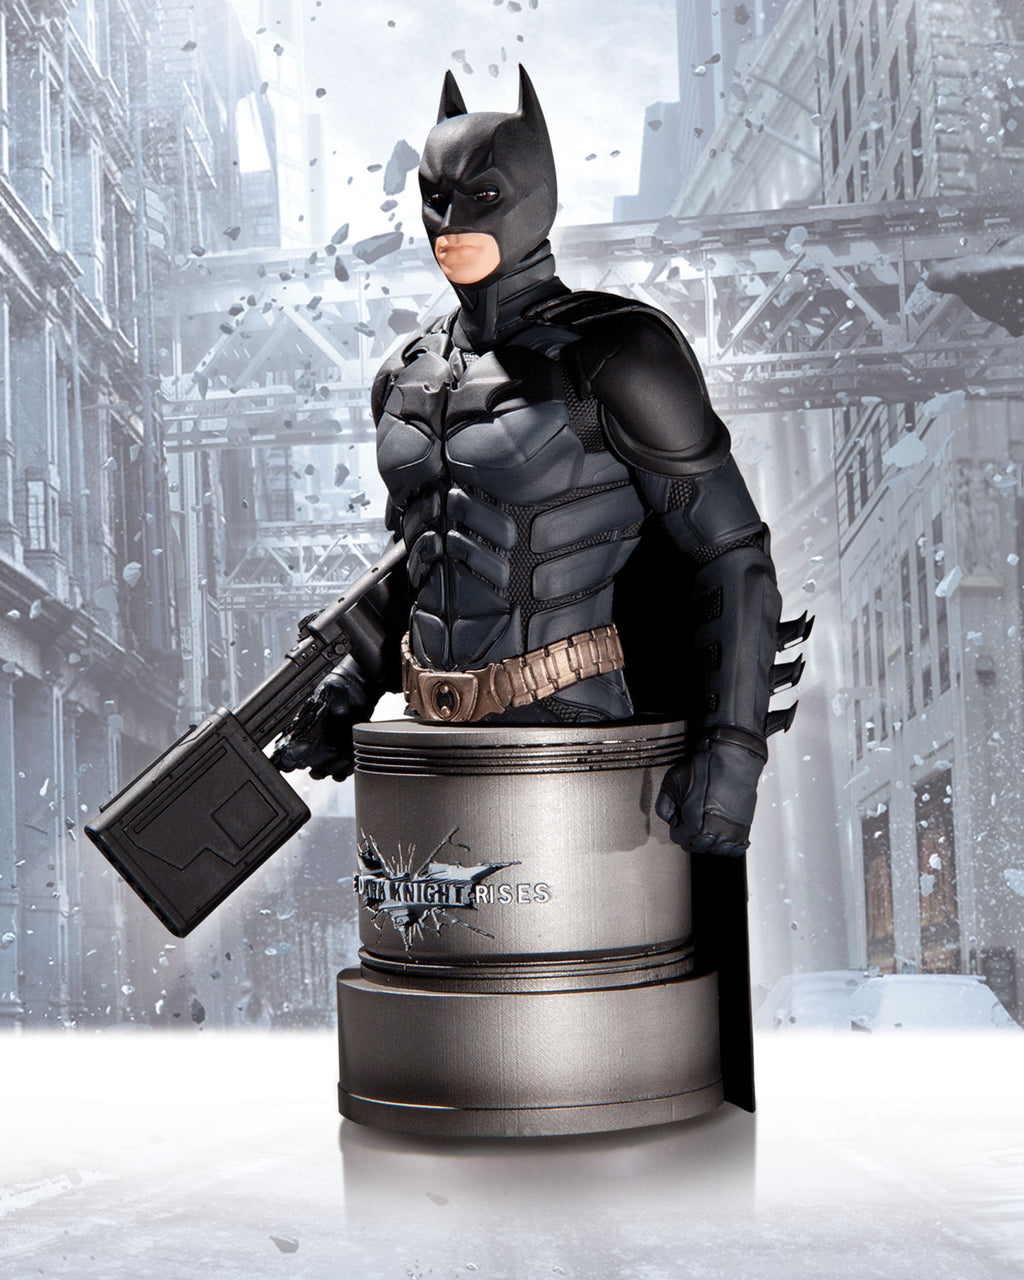 Batman The Dark Knight Rises 6 Inch Bust Statue - Batman with EMP Rifle Bust